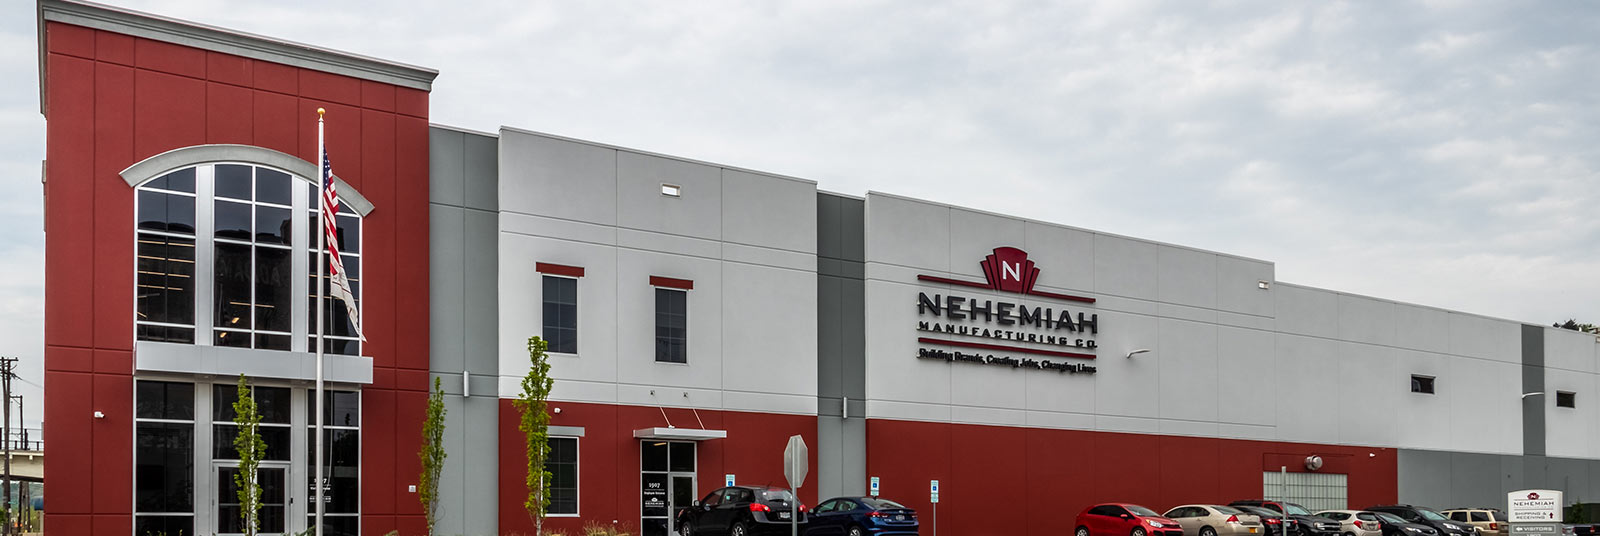 Entrance to the Nehemiah Manufacturing facility in Cincinnati, Ohio.